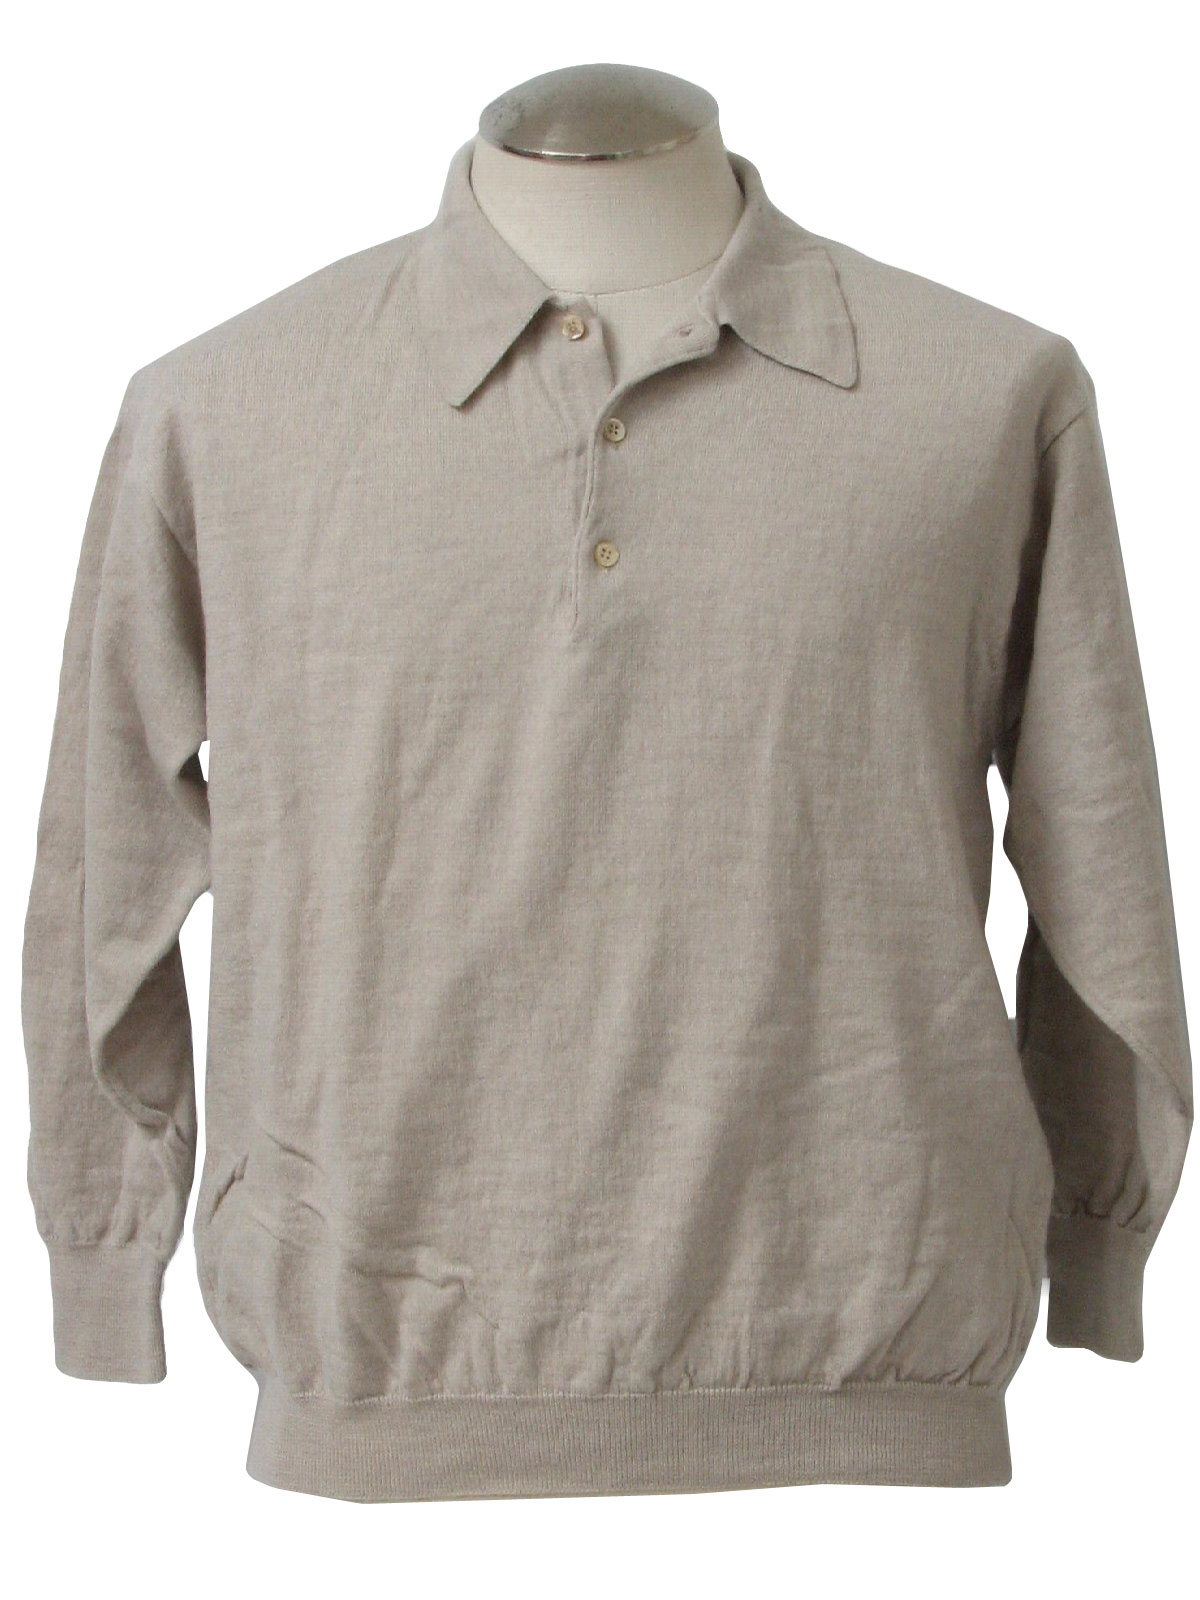 Retro Eighties Knit Shirt: 80s -no label- Mens oatmeal beige wool blend ...